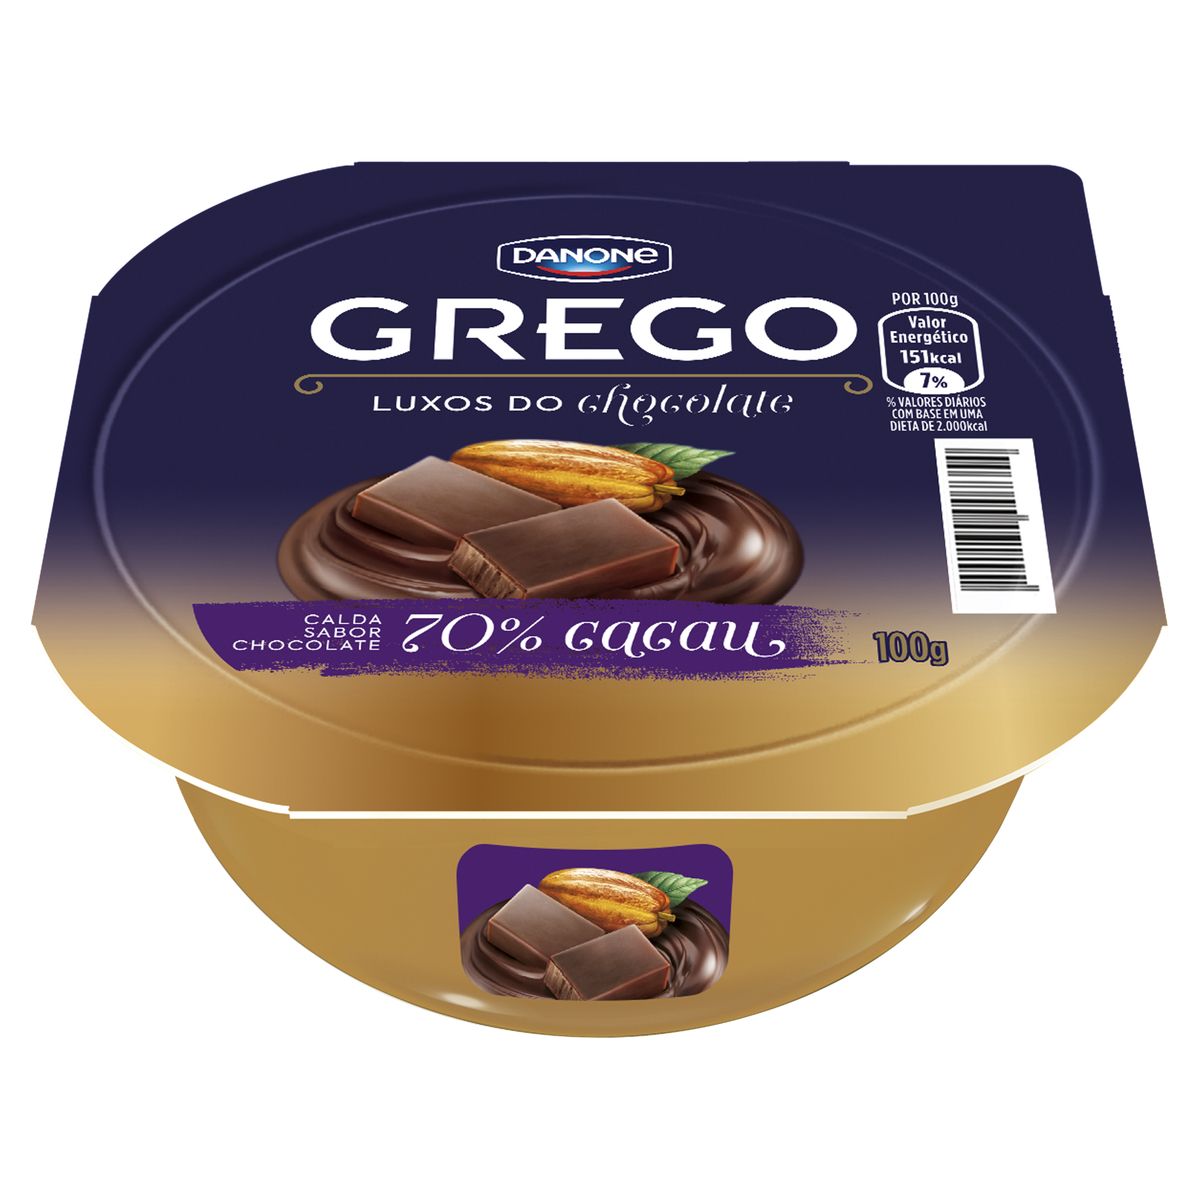 Iogurte Grego Calda Chocolate 70% Cacau Danone Luxos do Chocolate Pote 100g image number 0